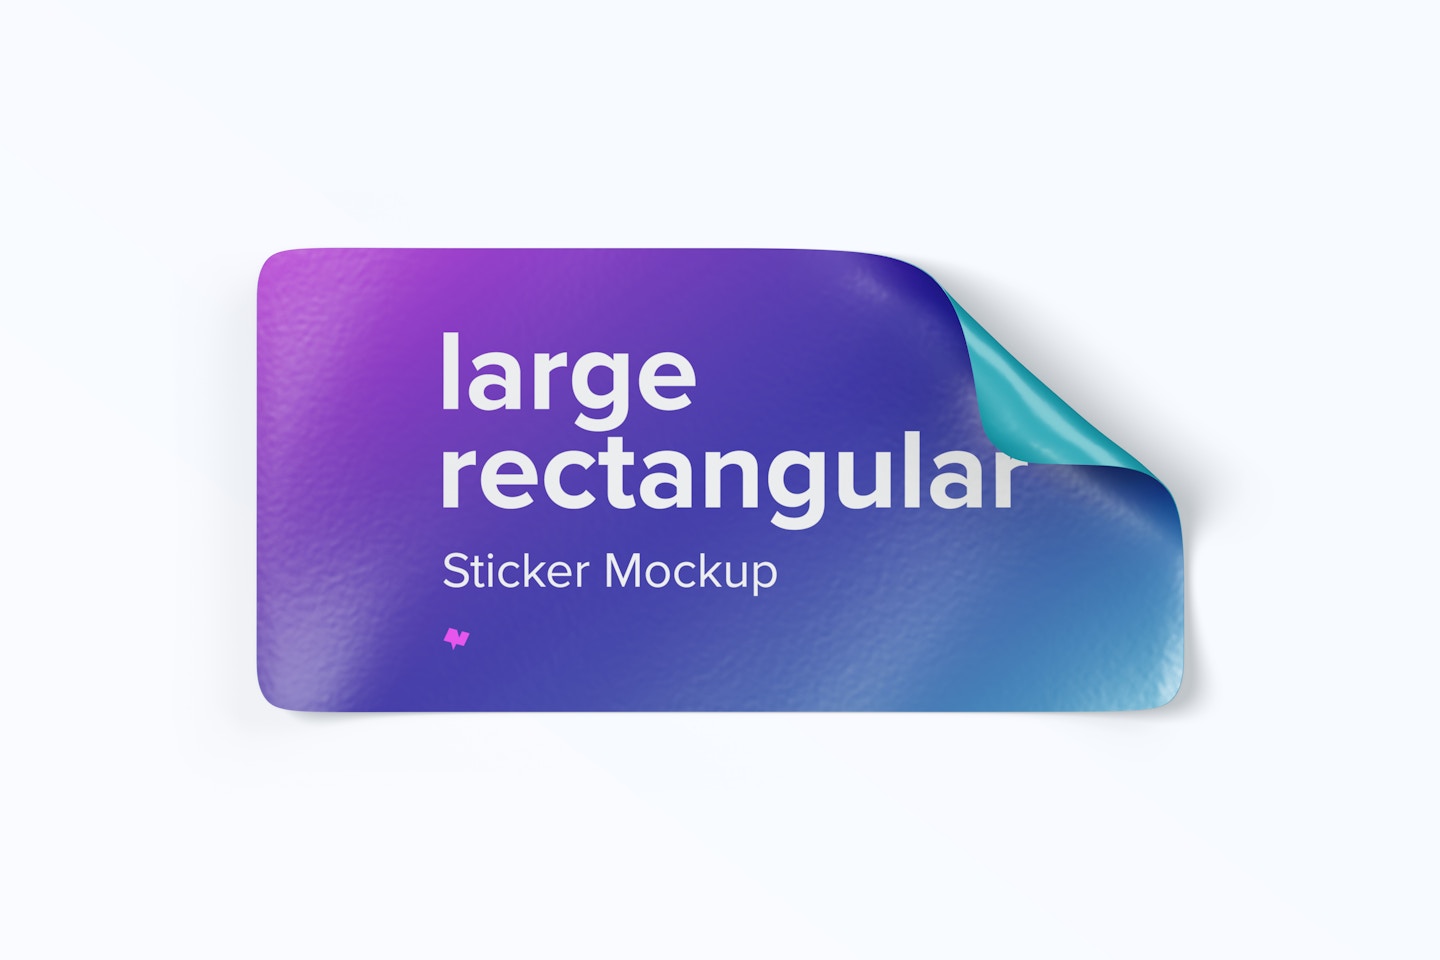 Large Rectangular Sticker Mockup, Top View 02